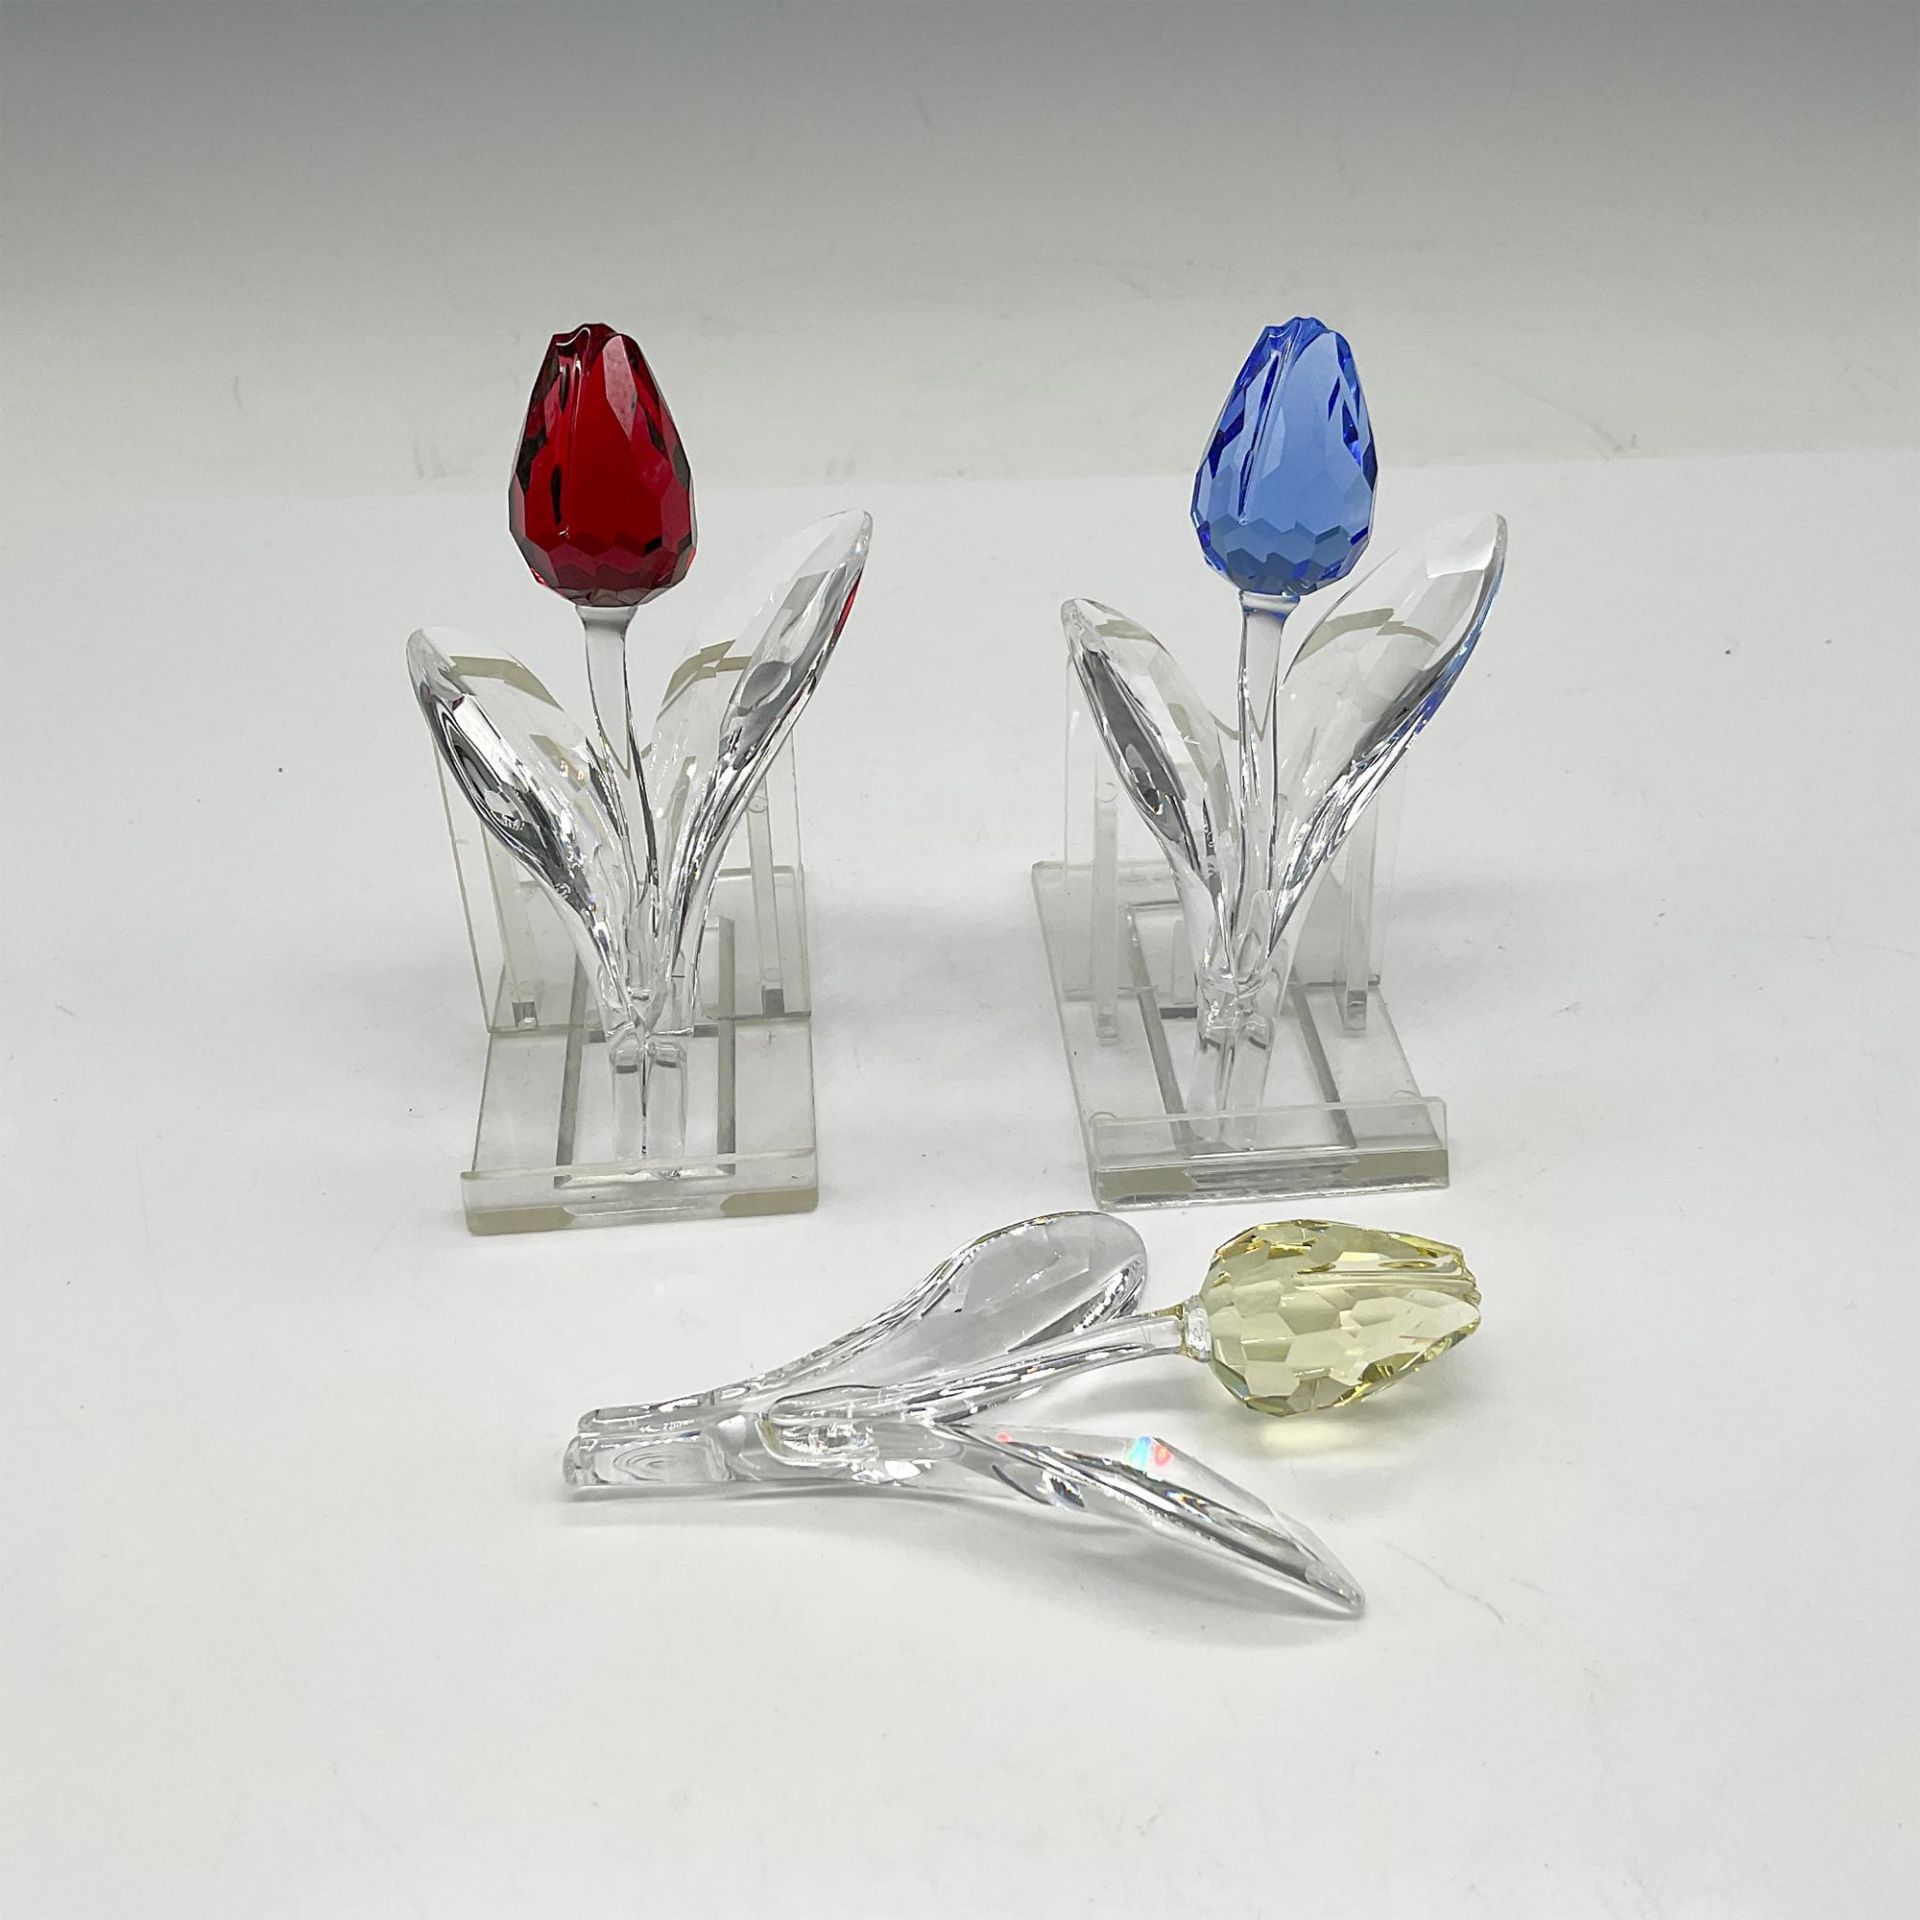 Swarovski Crystal Society Figurines, 3 Tulips